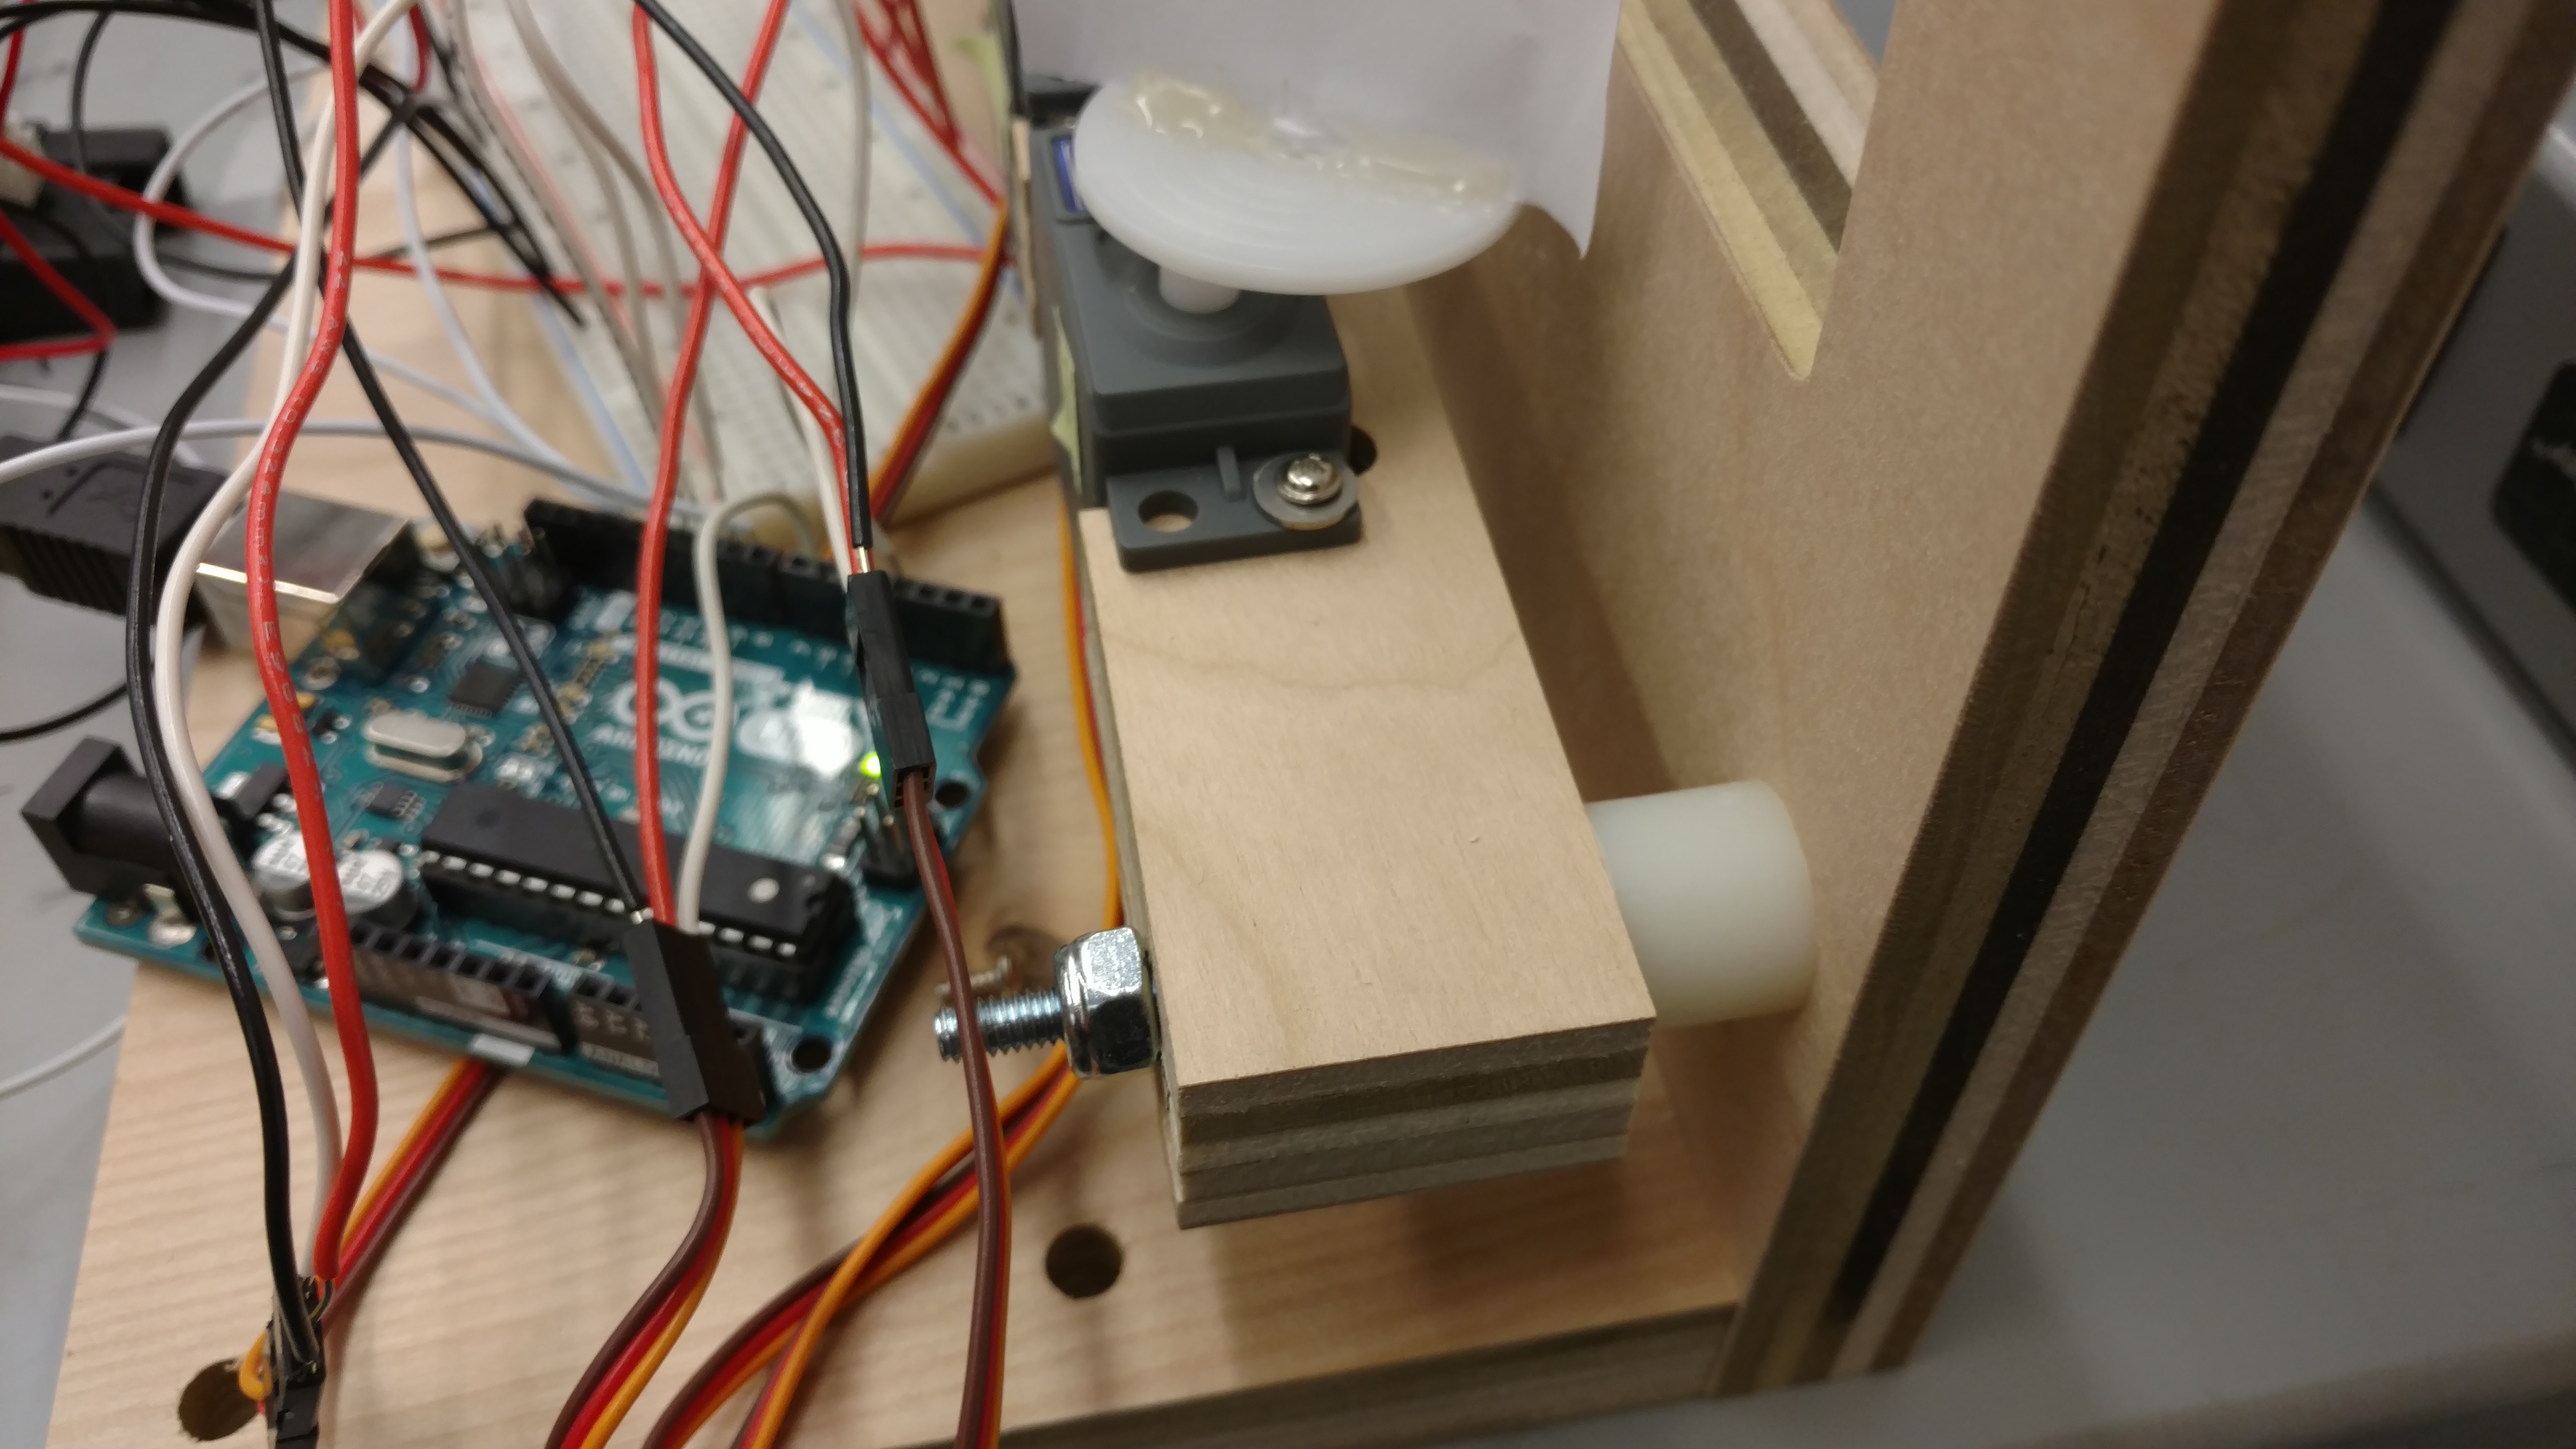 Messy Arduino wiring